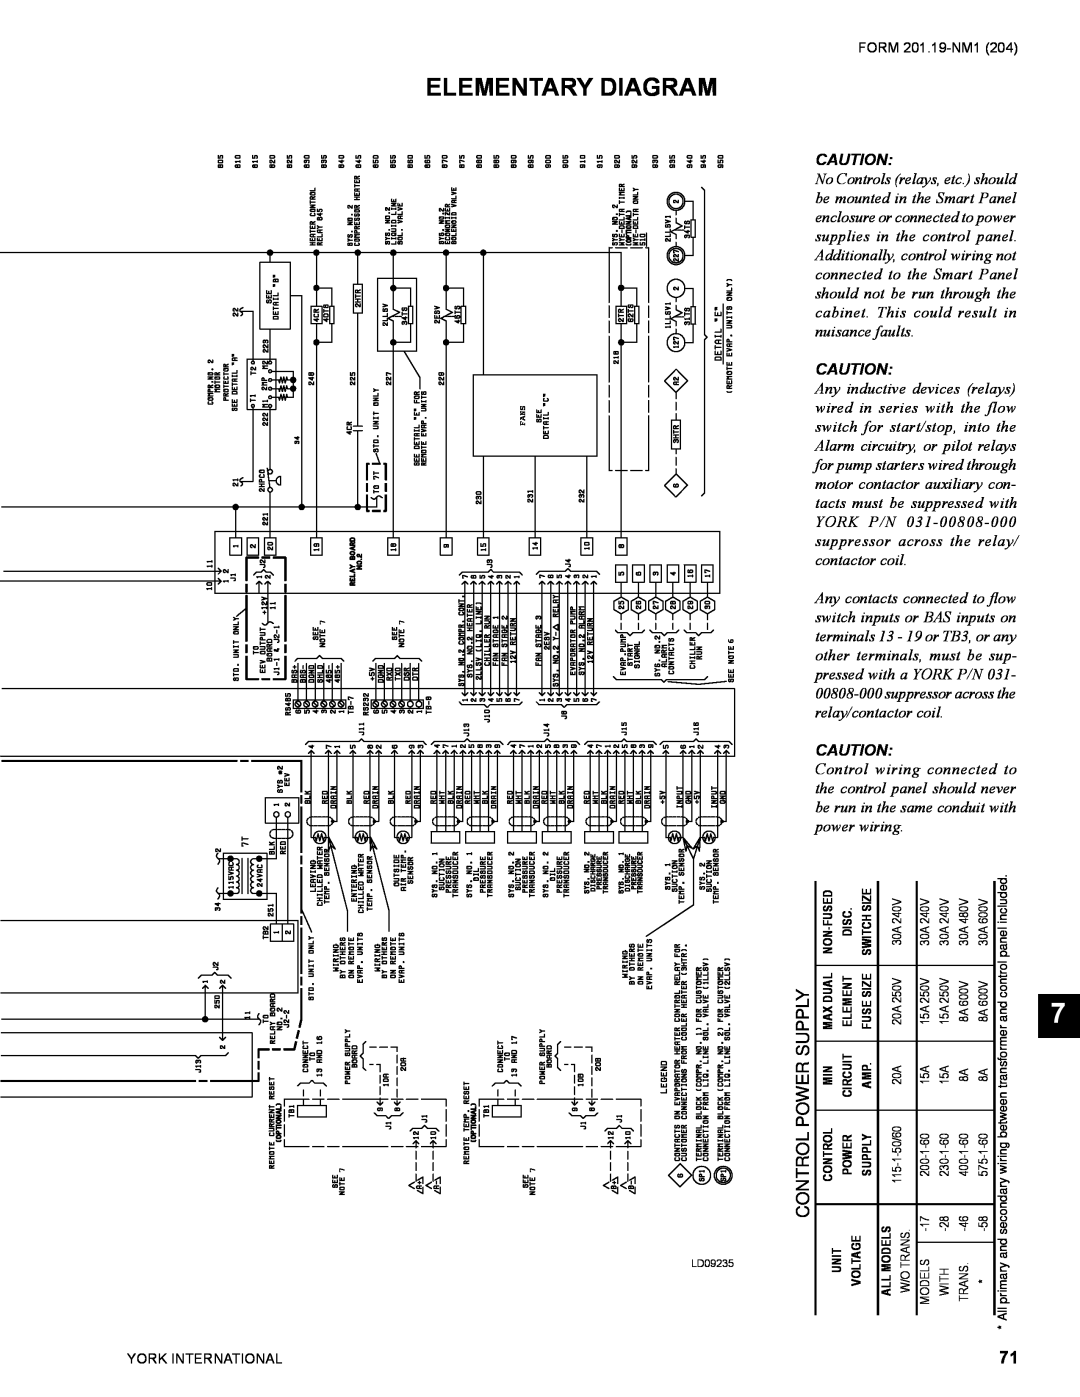 York YCAS0130 manual Elementary Diagram, FORM 201.19-NM1, York International 